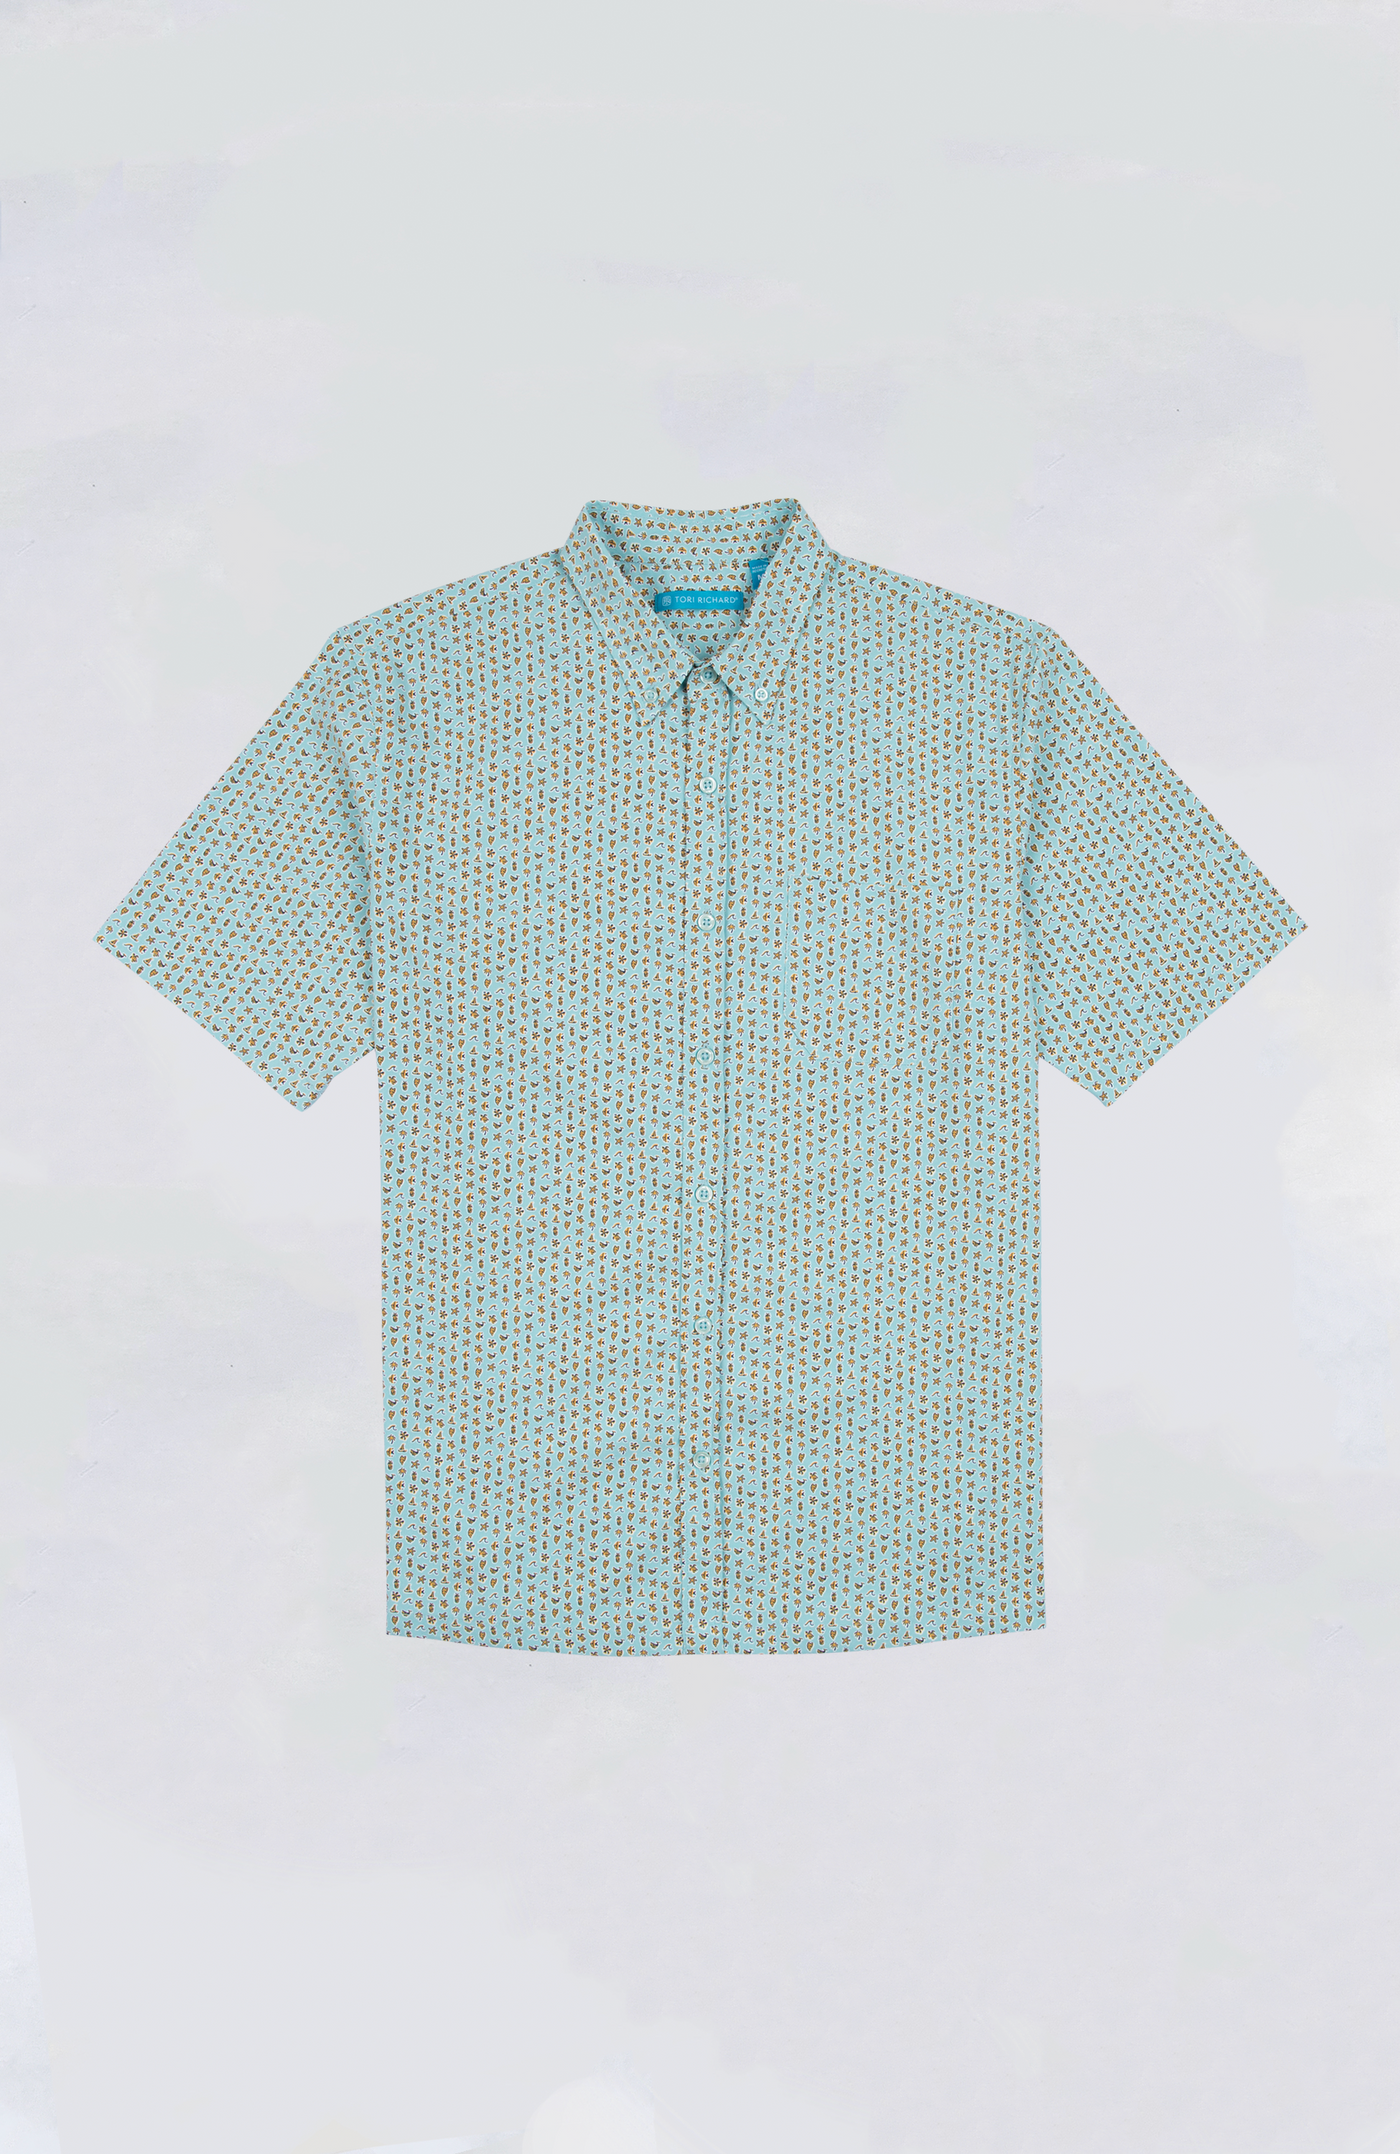 Tori Richard - Tail Winds Aloha Shirt